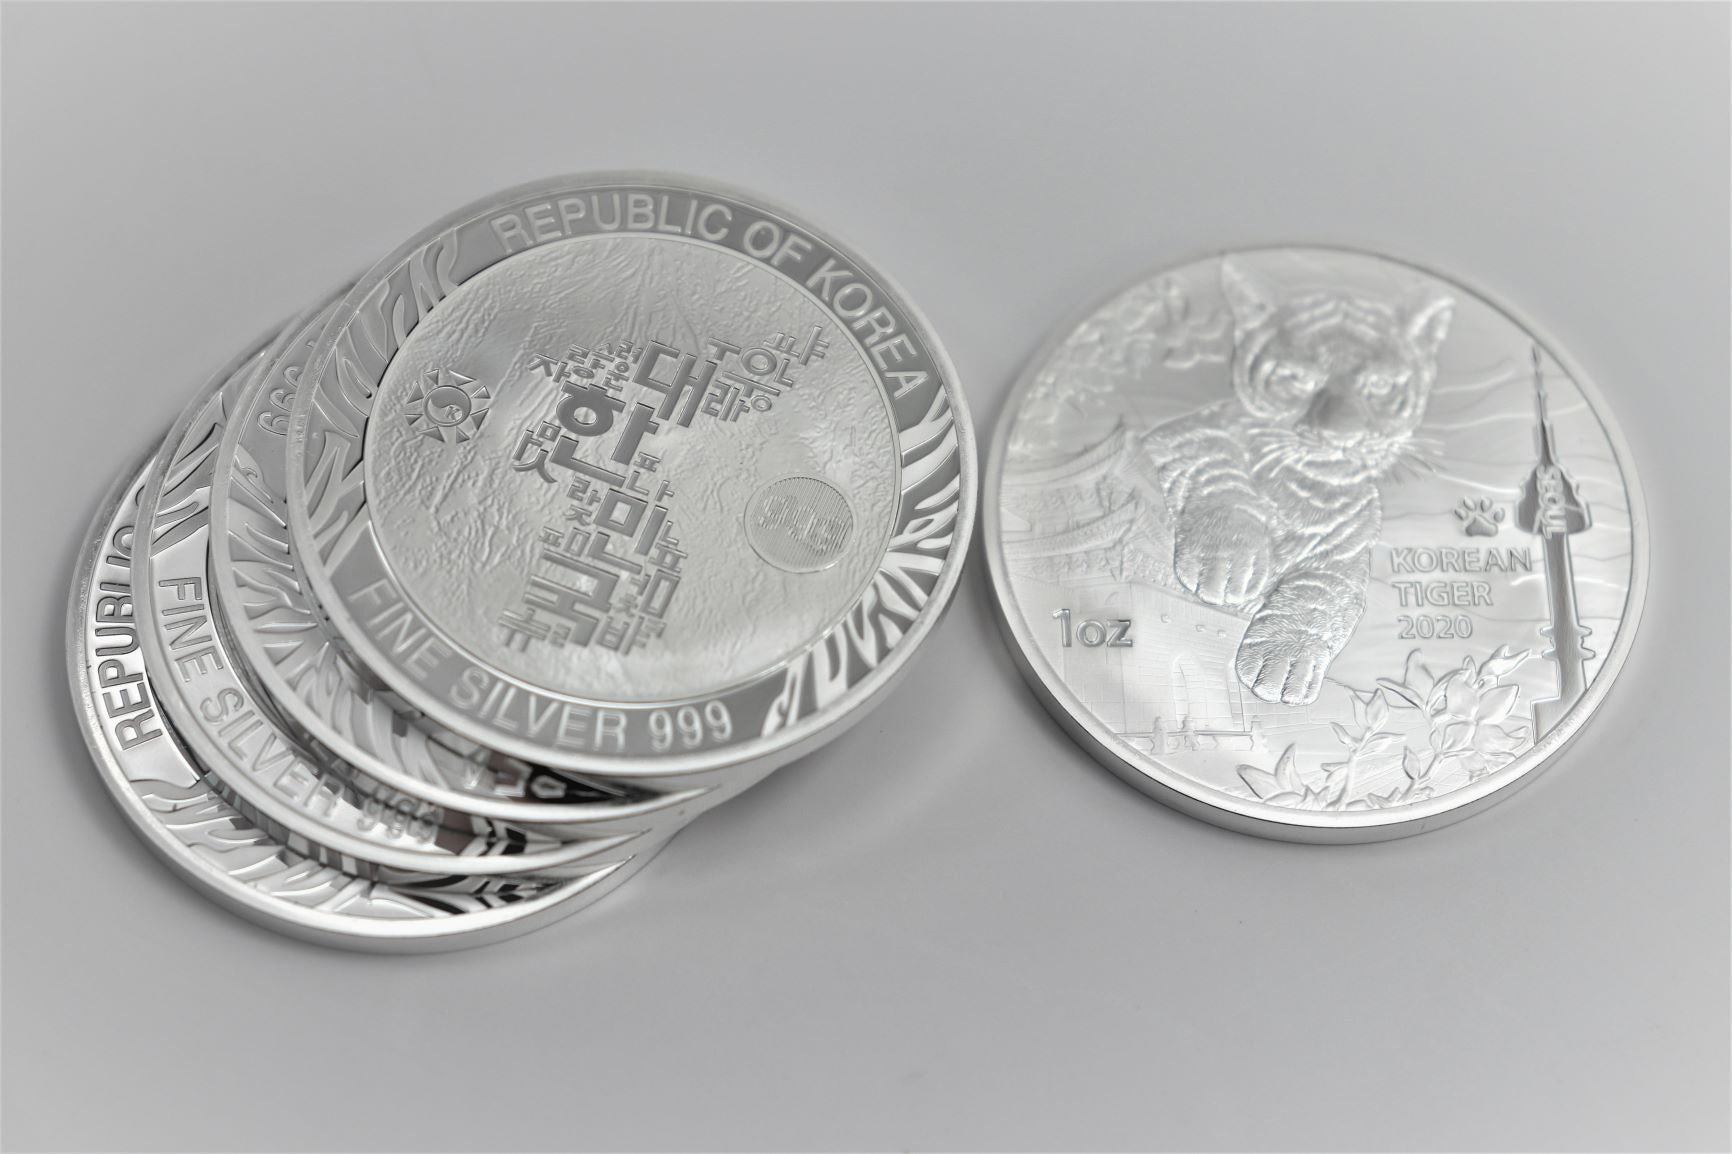 1 oz Silver Korean Tiger Medals